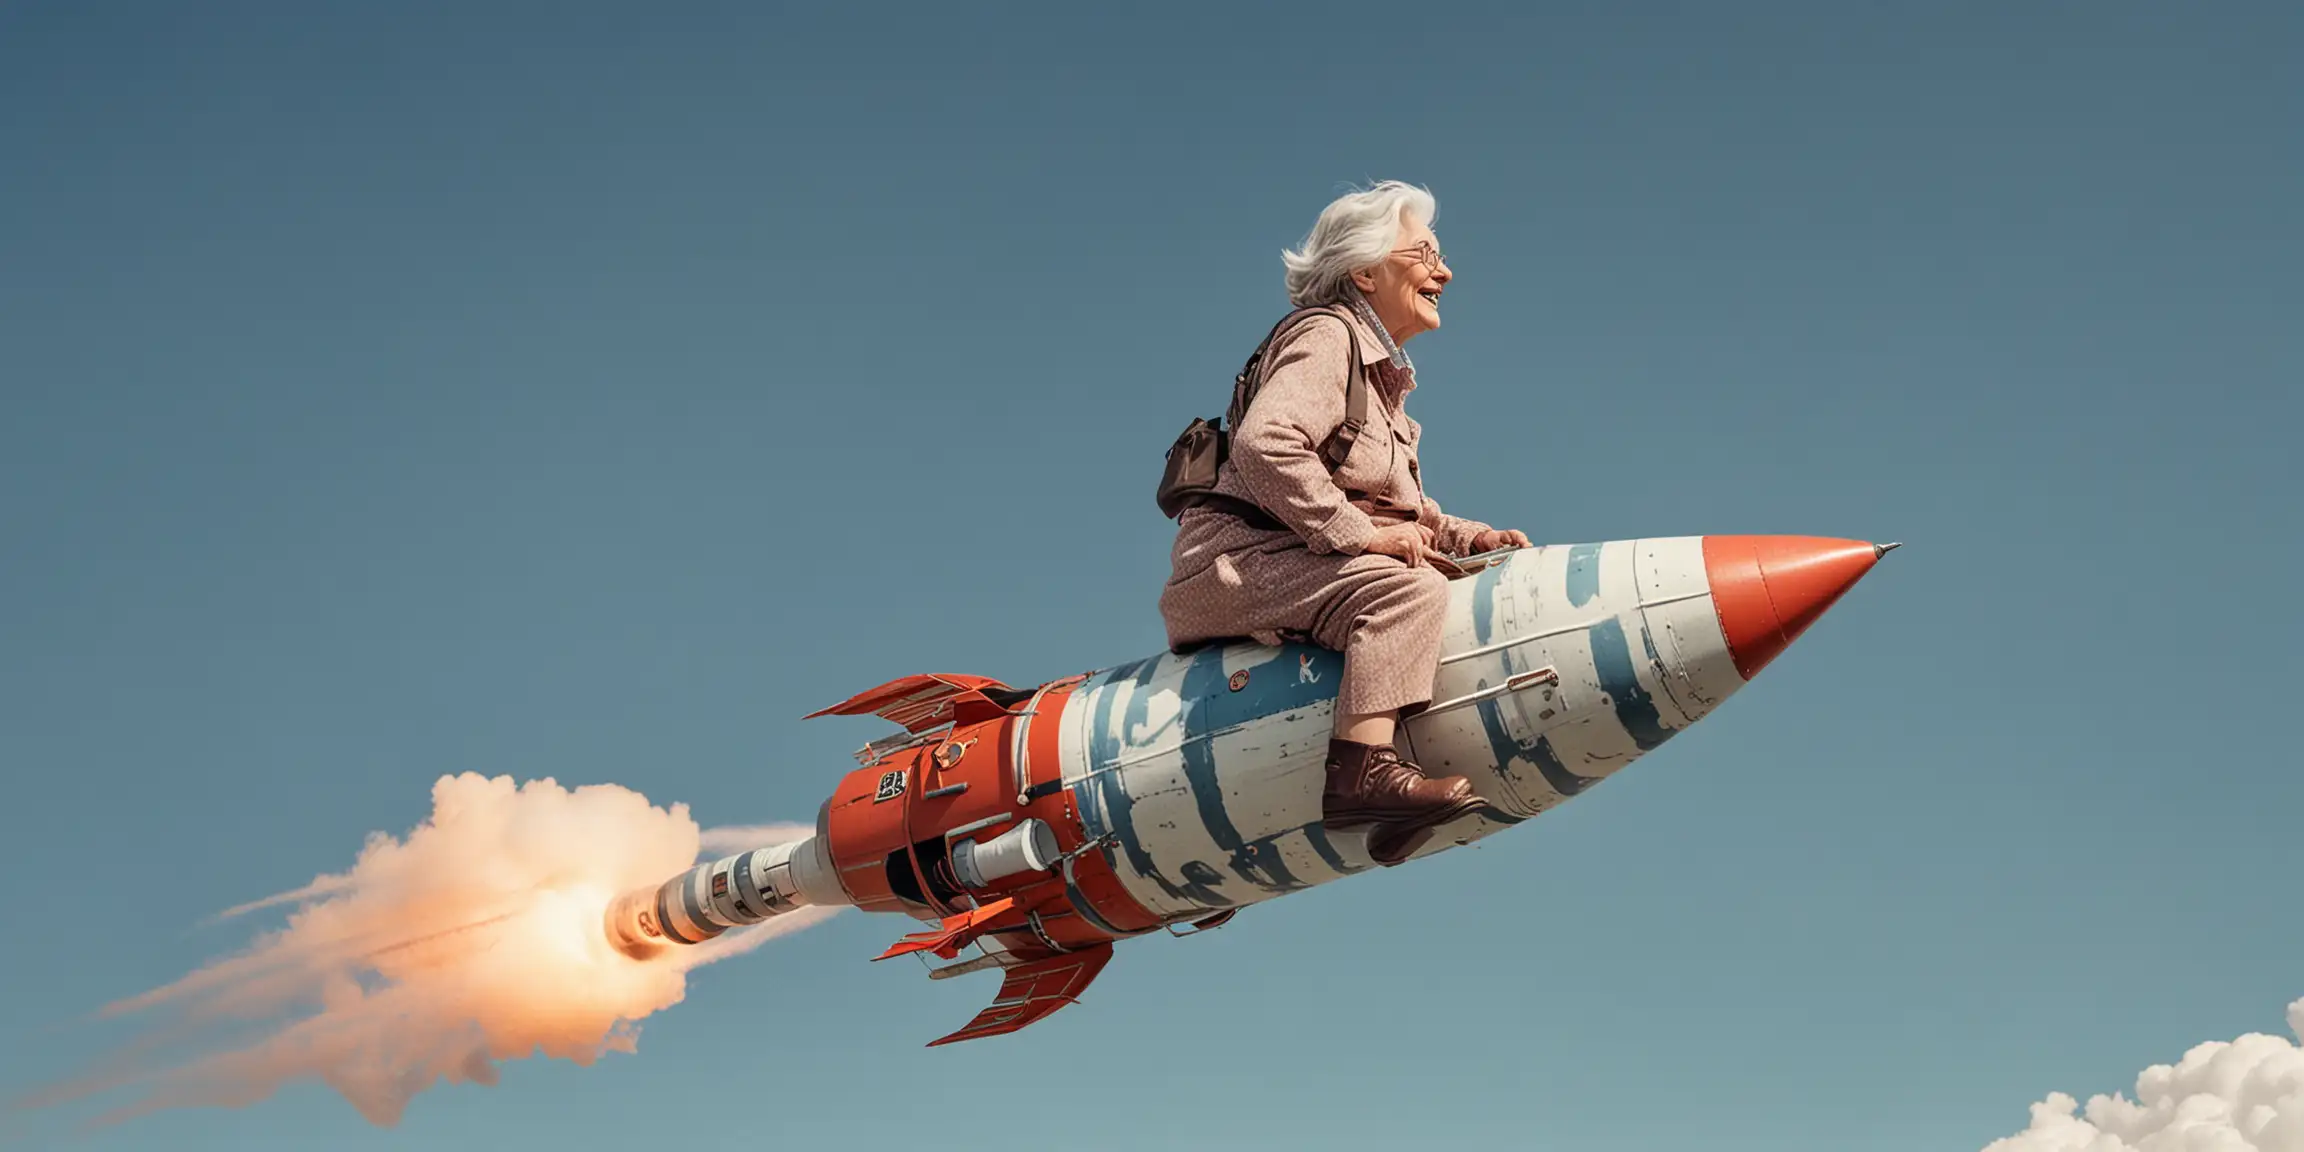 Elderly Woman Enjoying a Thrilling Rocket Ride Across a Clear Blue Sky